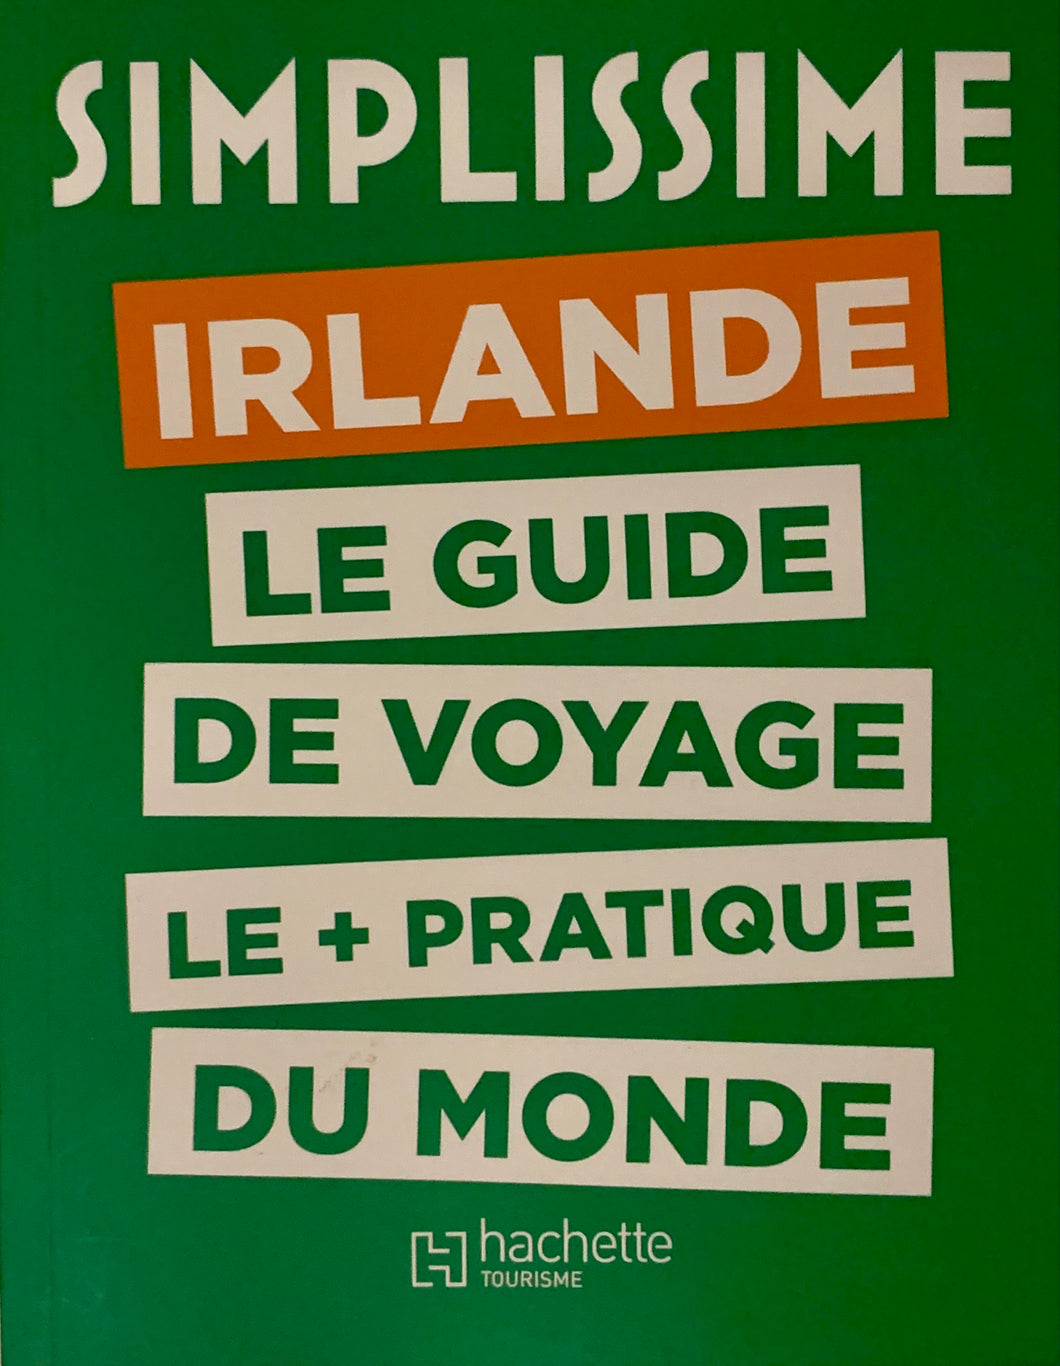 Simplissime: Irlande - Le guide de voyage (Edição francesa)